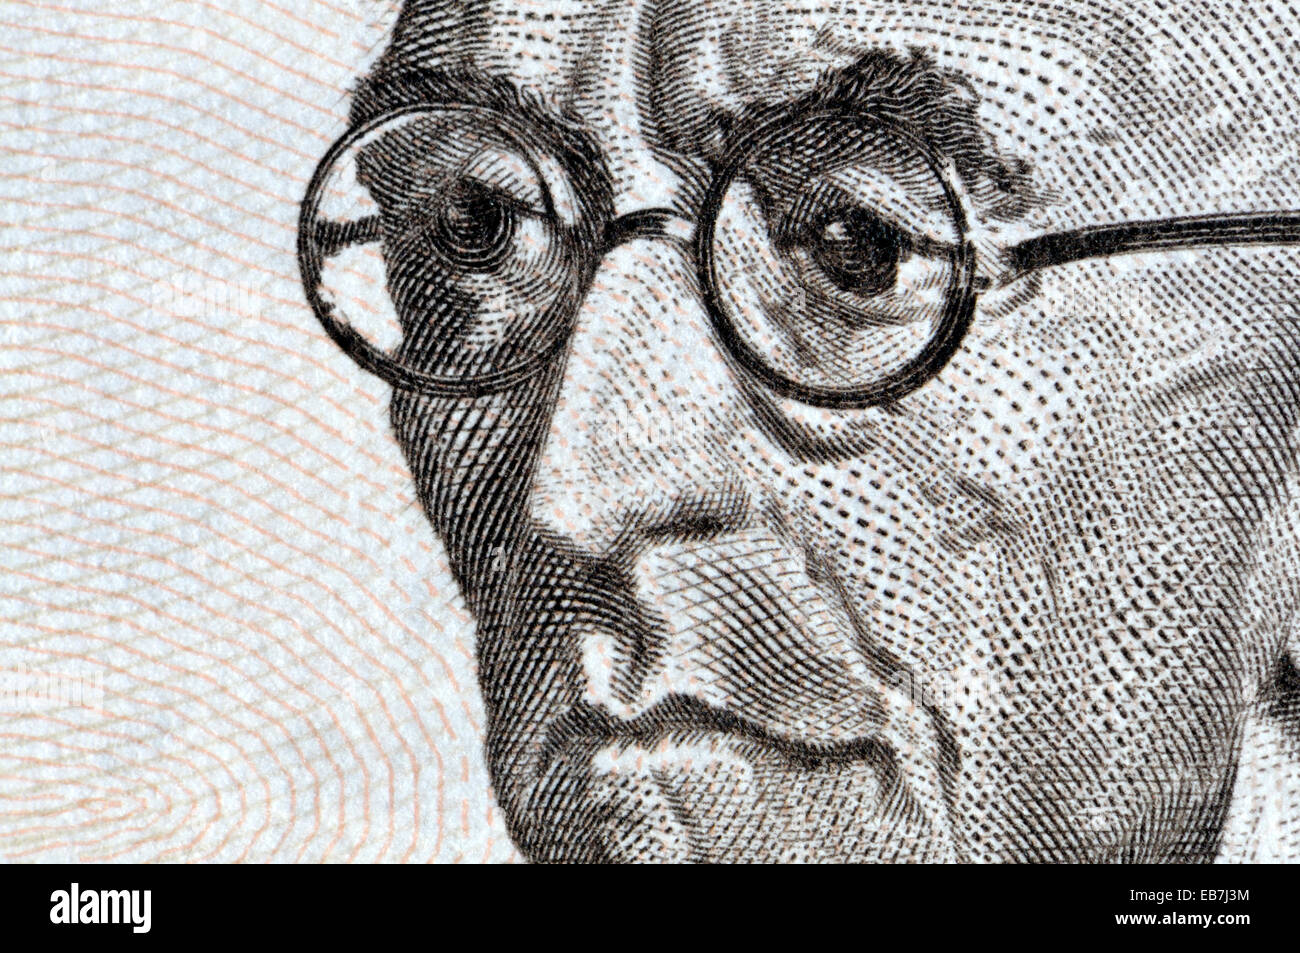 Detail from a 1970 Spanish banknote showing portrait of Manuel de Falla (Manuel de Falla y Matheu - Spanish composer 1876-1946) Stock Photo